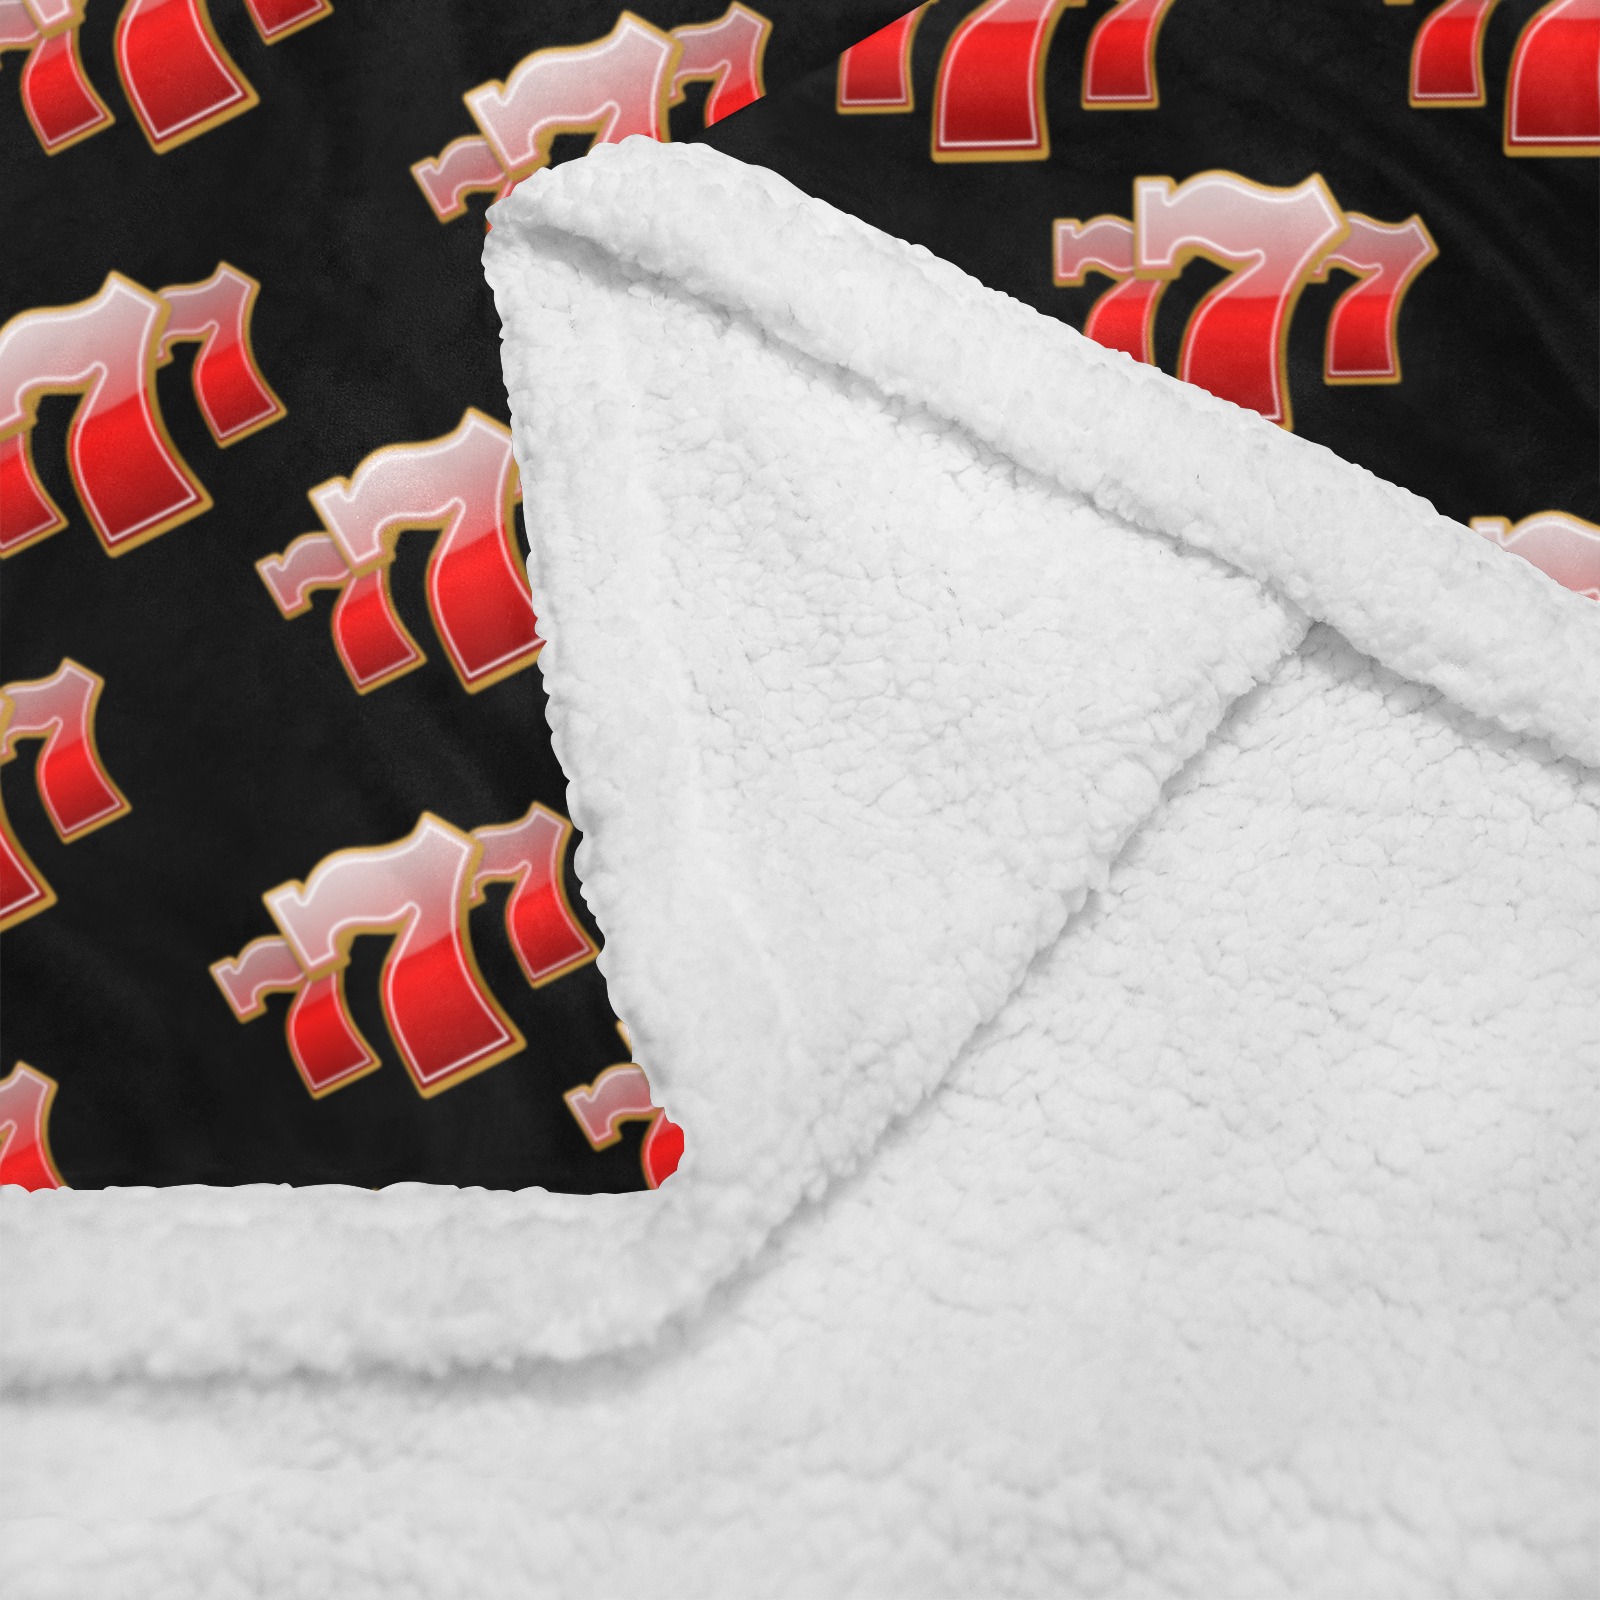 Las Vegas Lucky Sevens 777 on Black Double Layer Short Plush Blanket 50"x60"